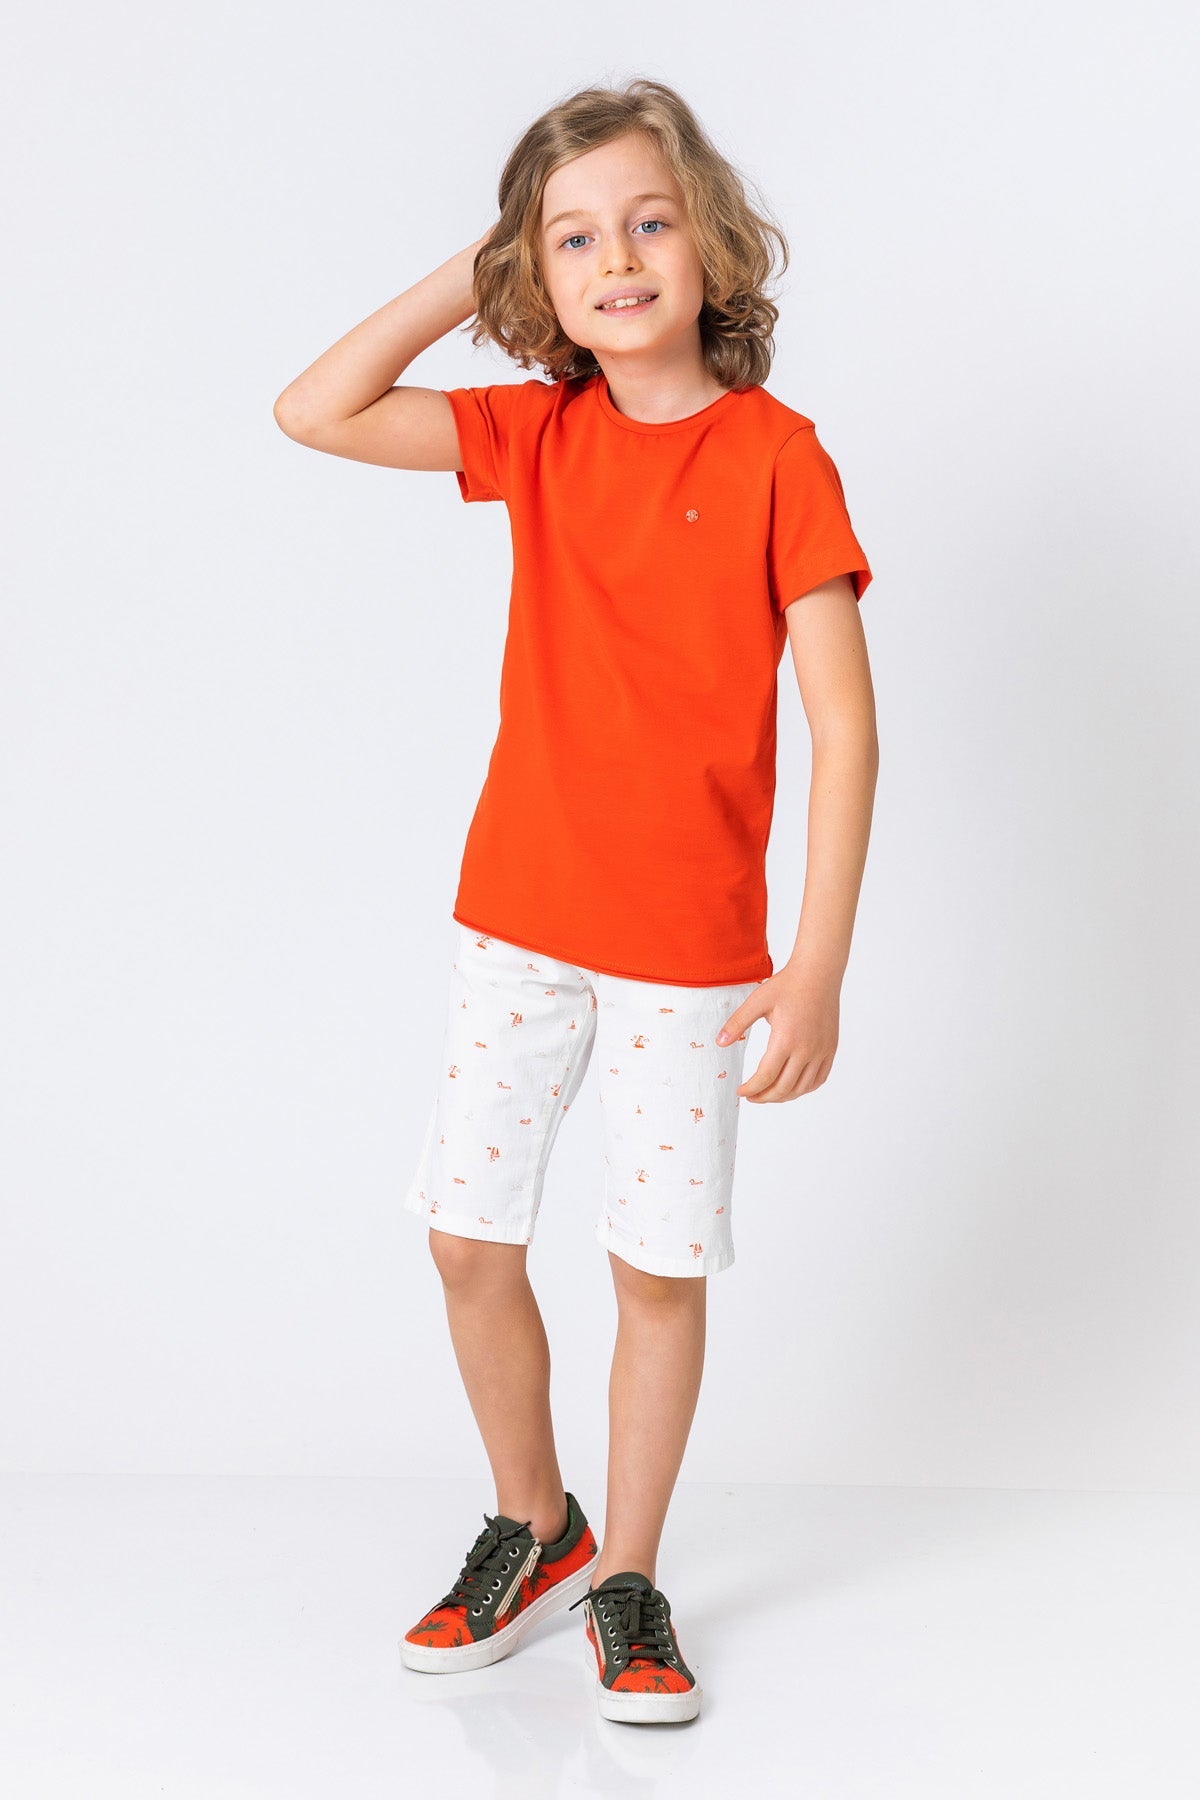 Plain Kids Basic Solid Short Sleeve Boys T-Shirt Round Neck InCity